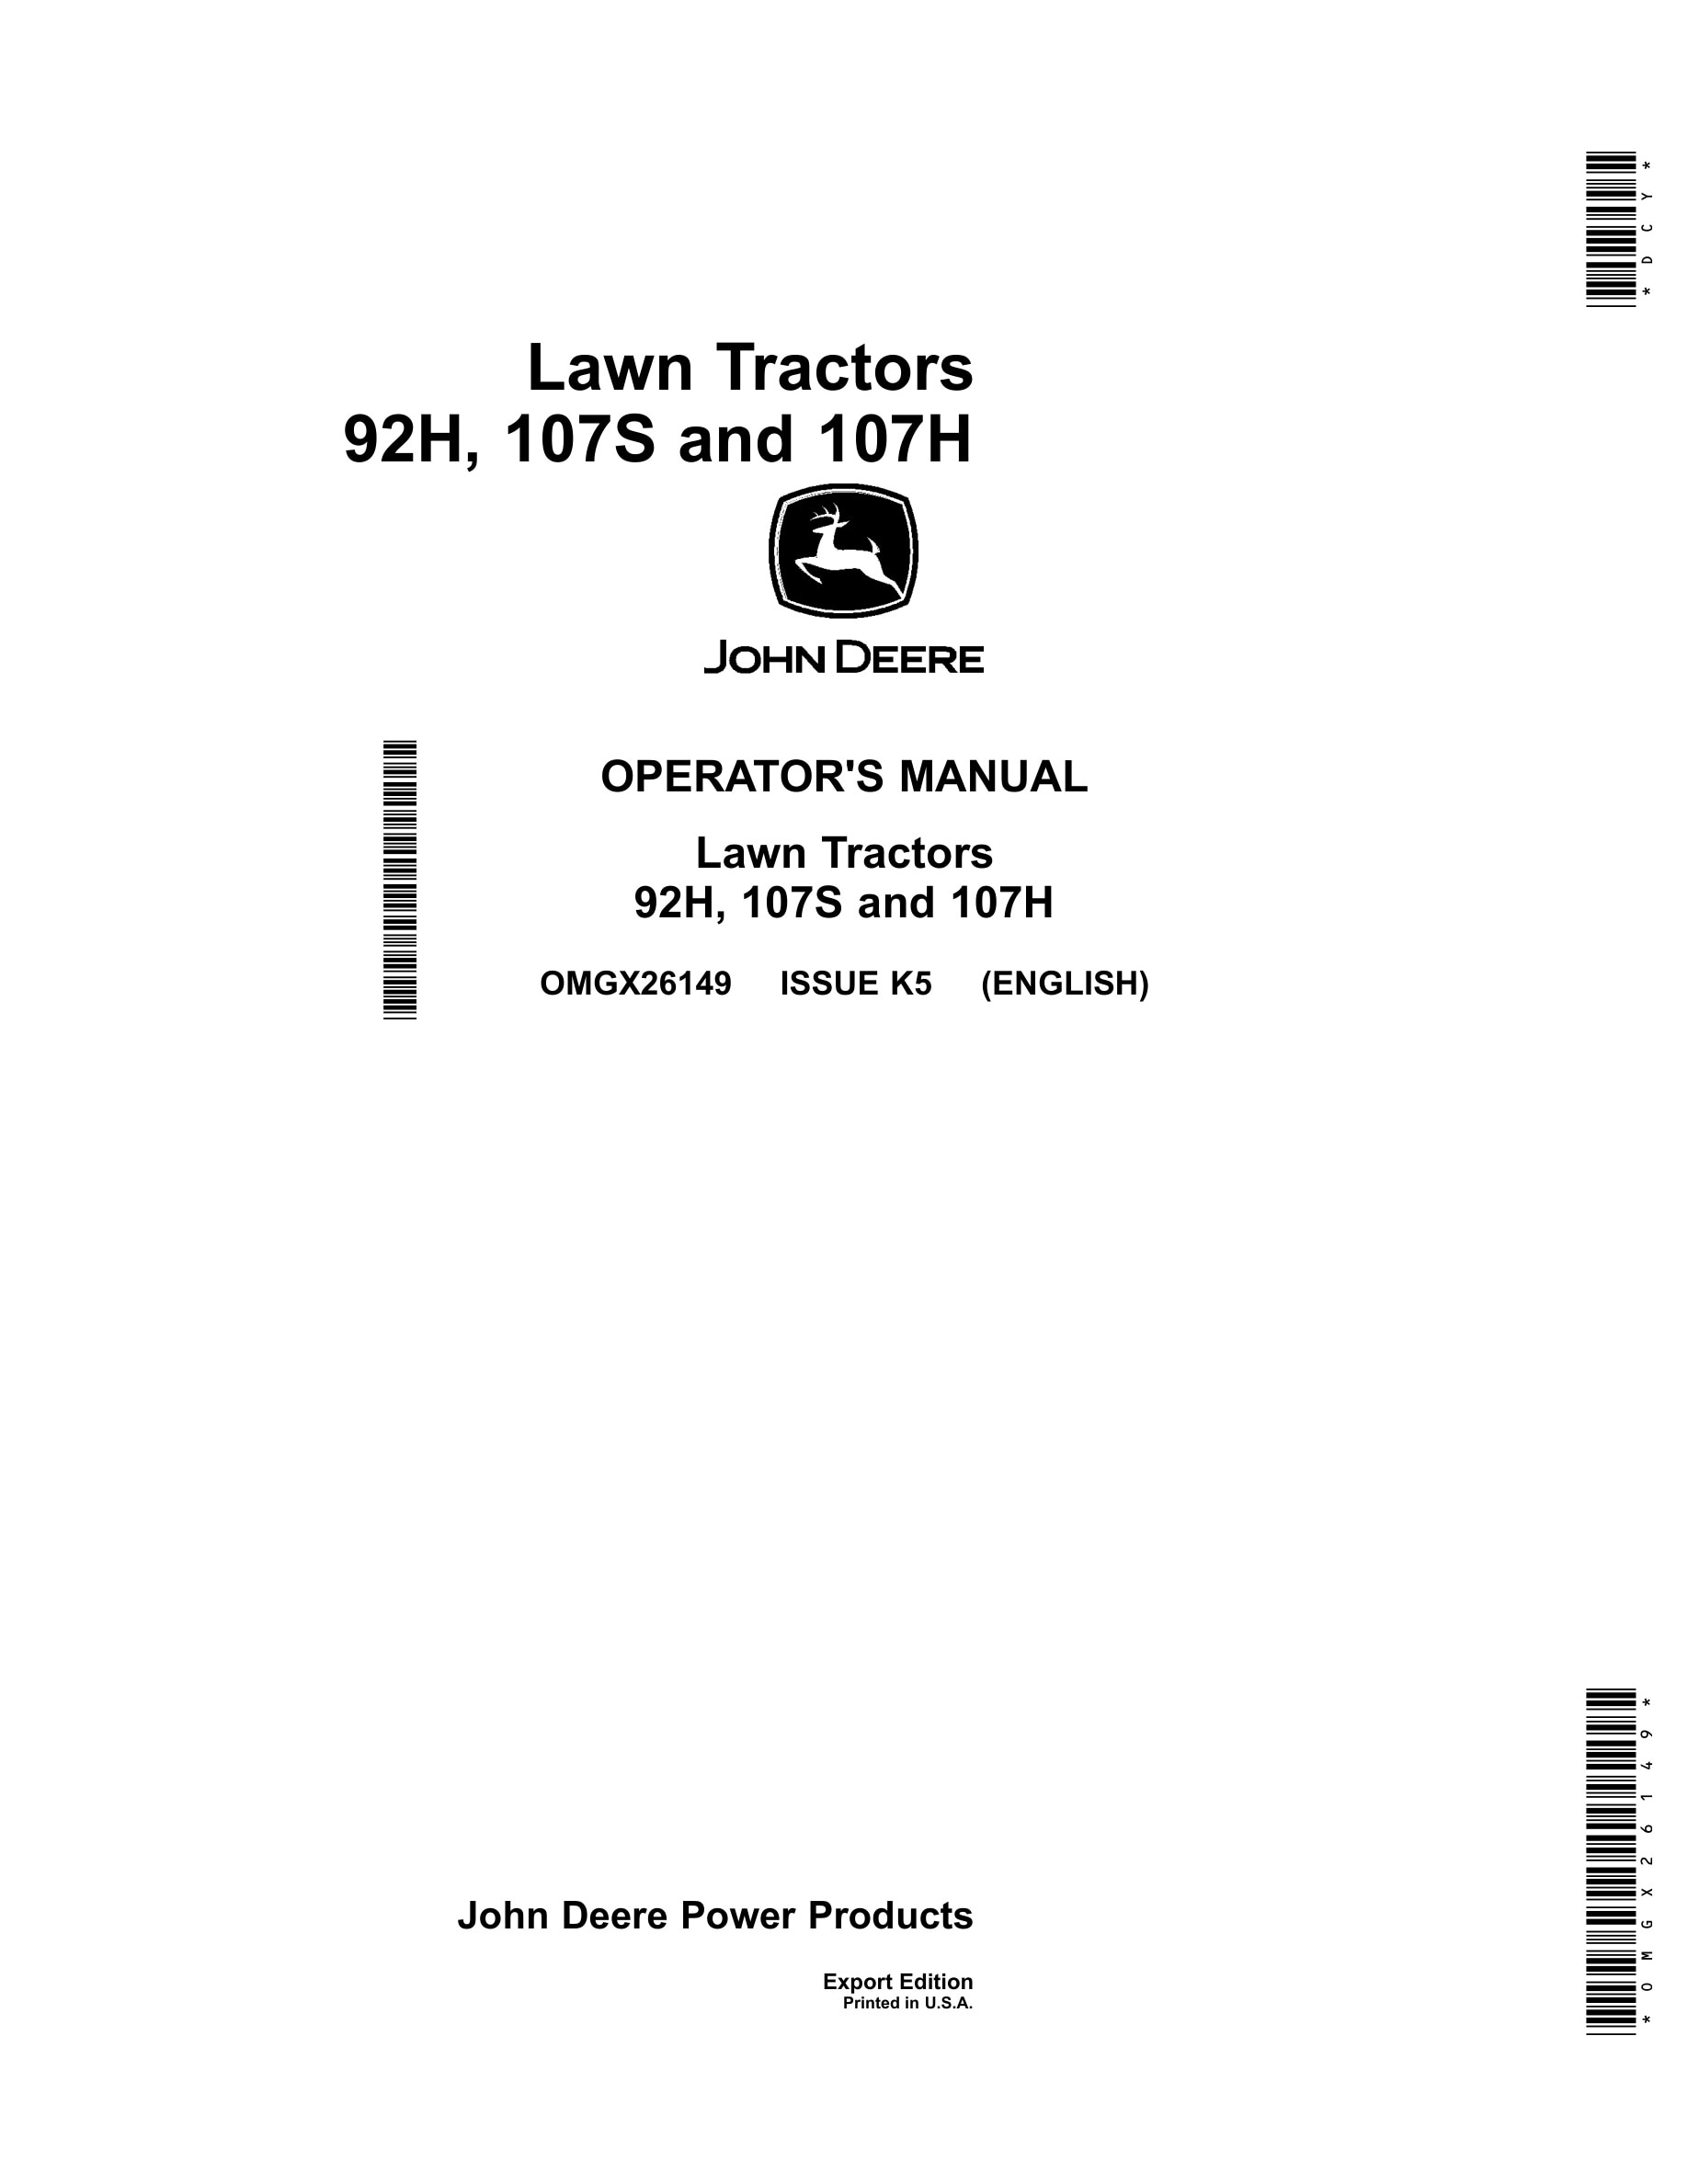 John Deere 92h, 107s And 107h Lawn Tractors Operator Manuals OMGX26149-1